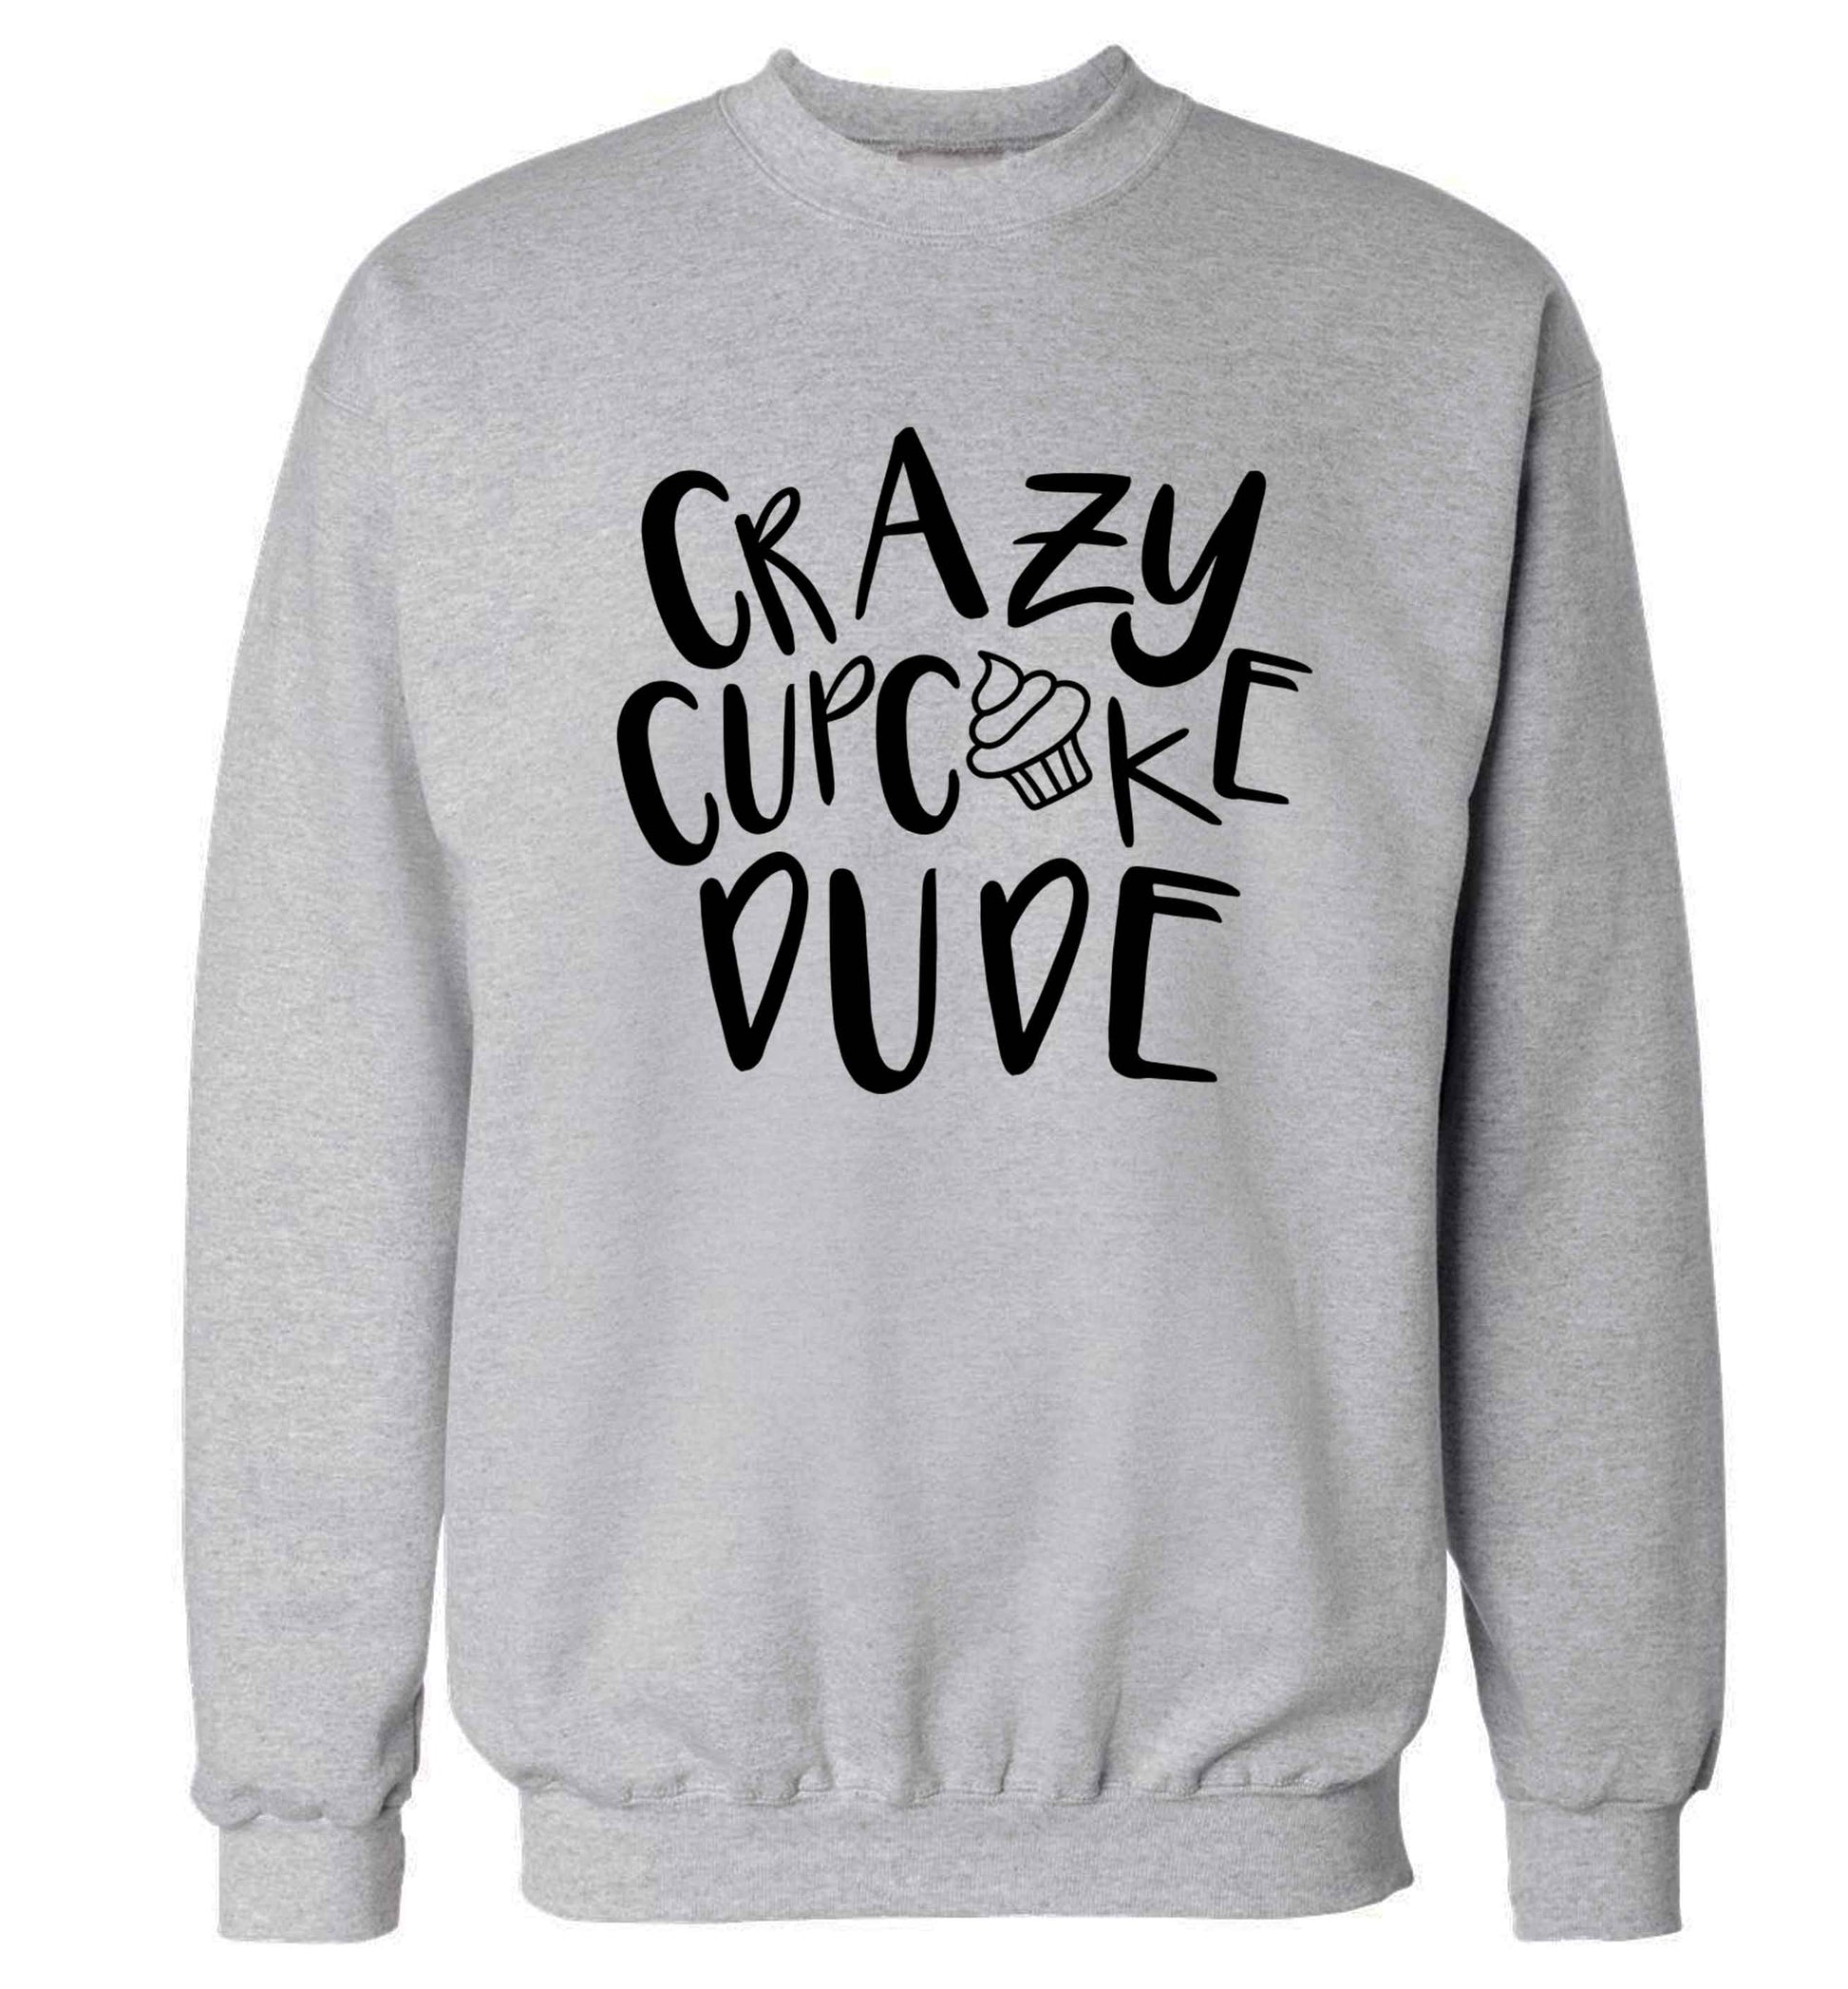 Crazy cupcake dude Adult's unisex grey Sweater 2XL